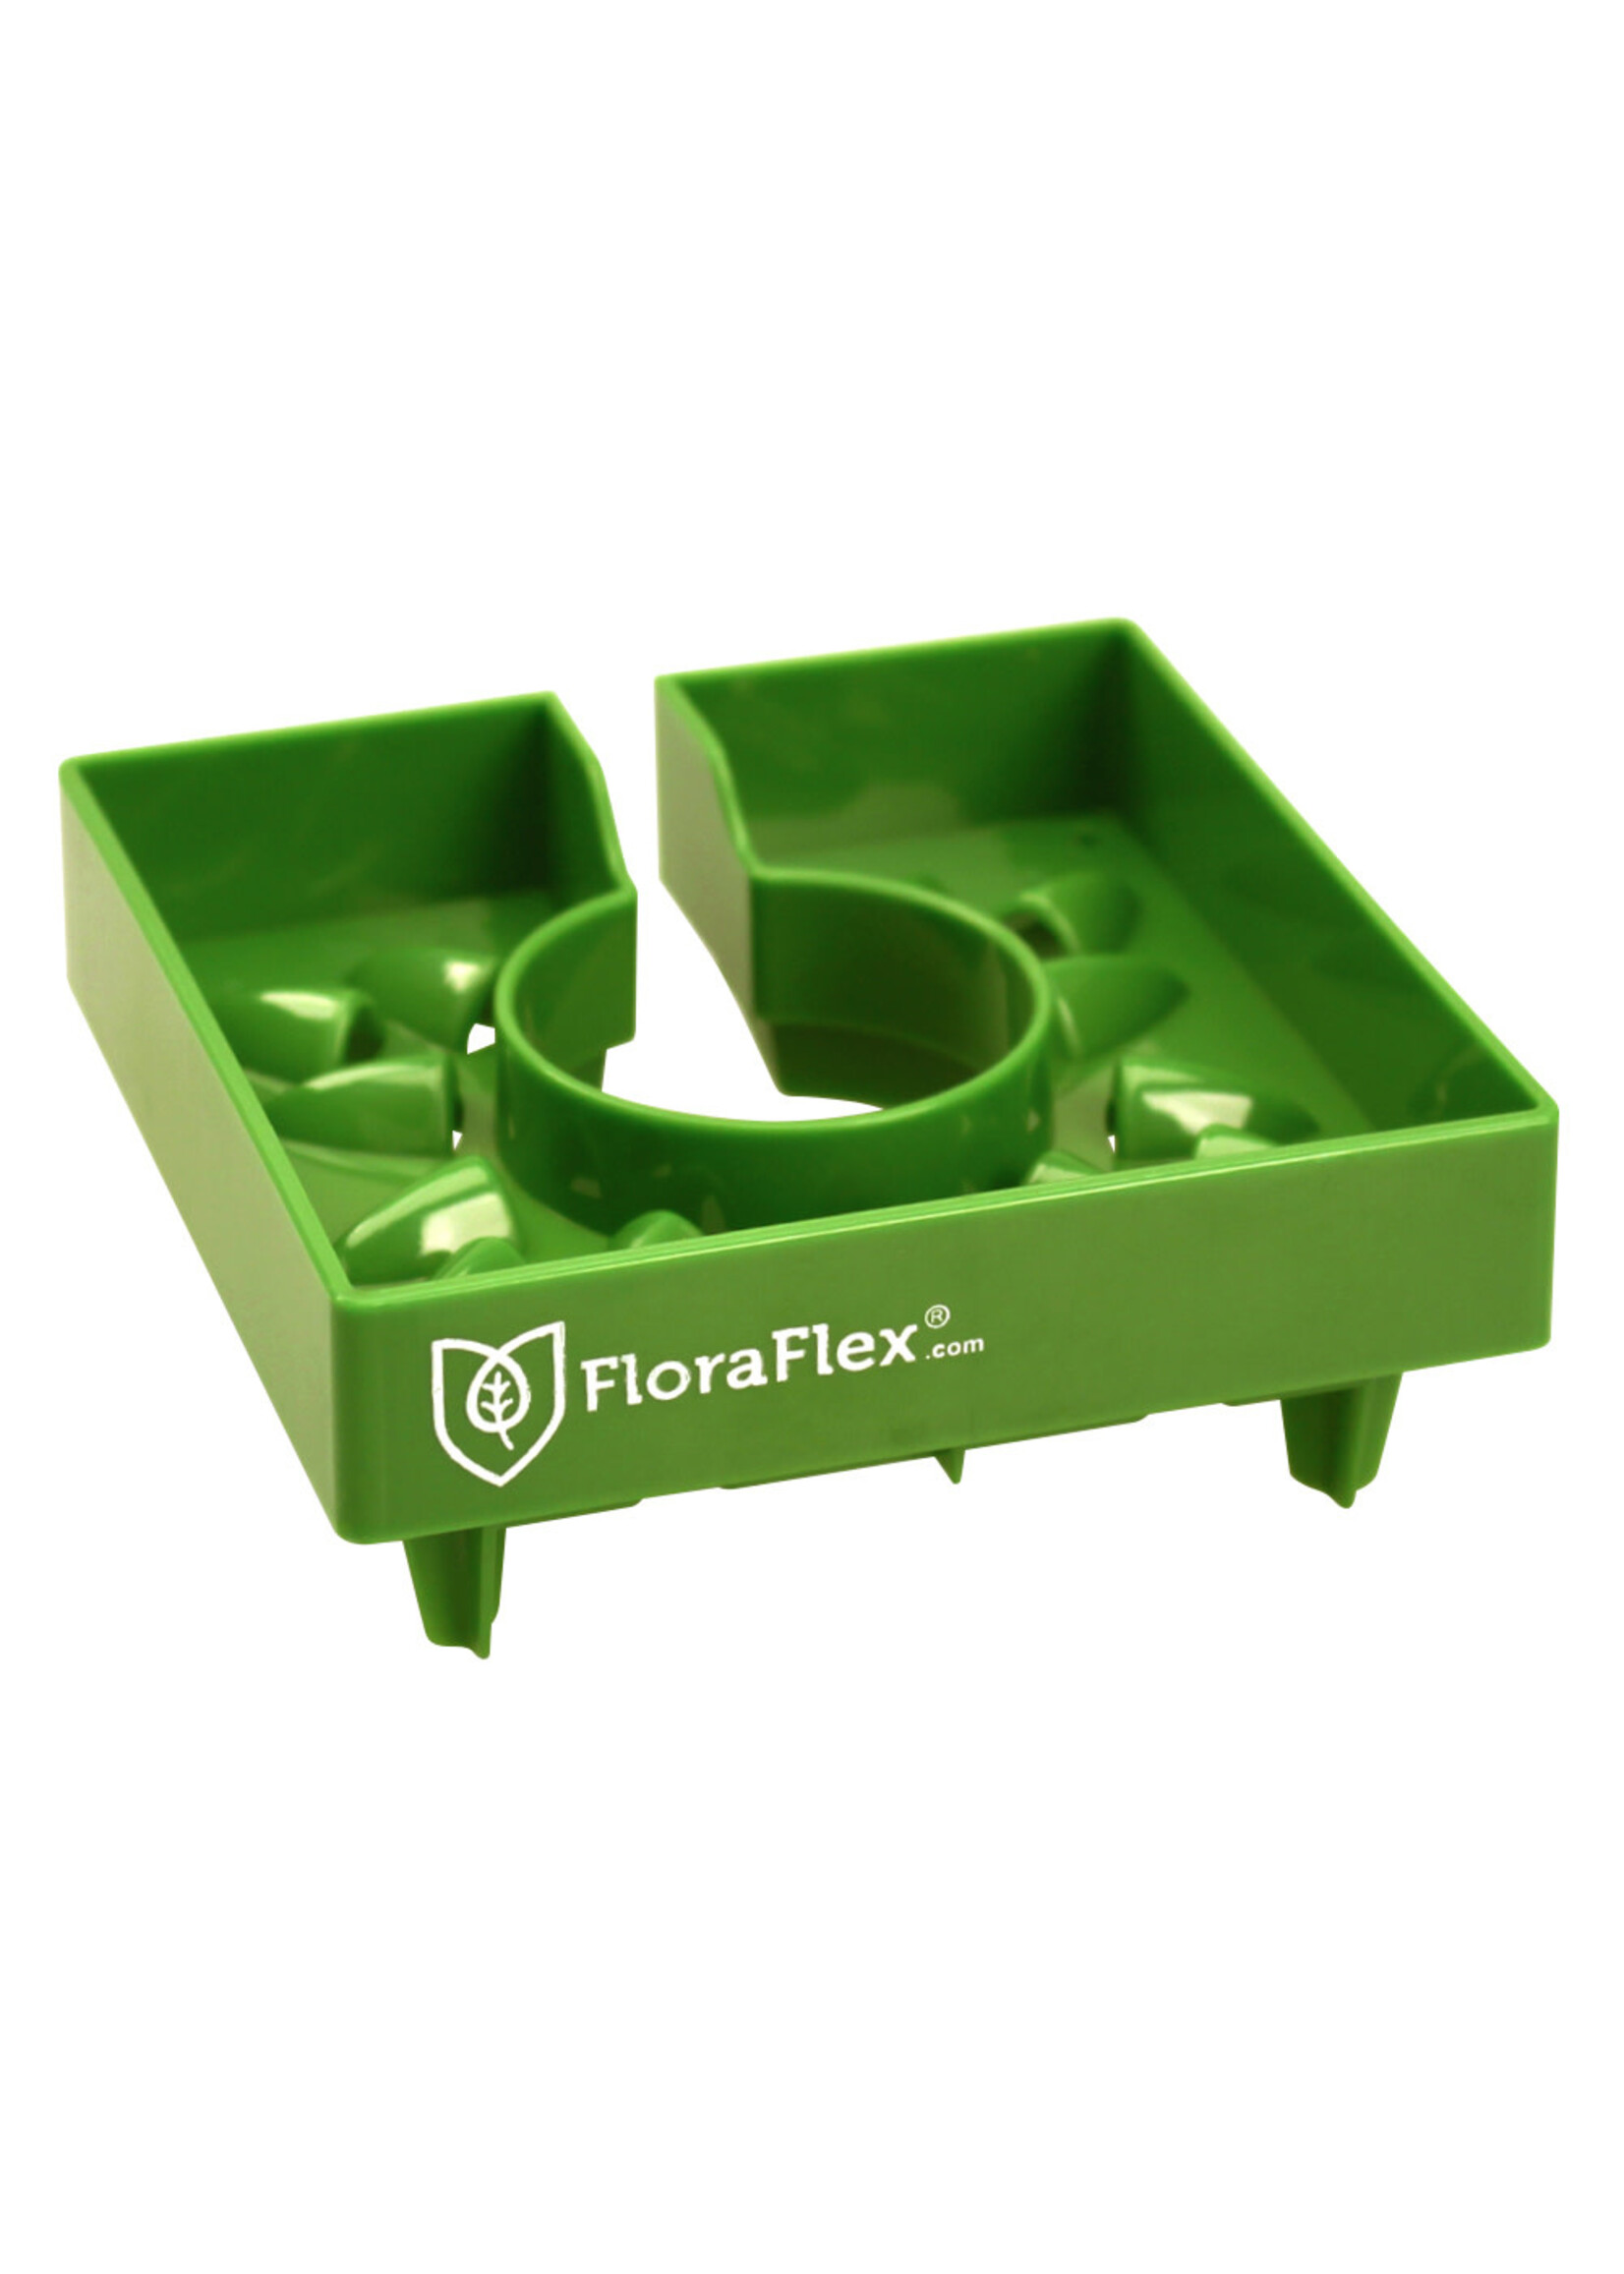 FloraFlex FloraFlex 4 in FloraCap 2.0 (160/Cs)